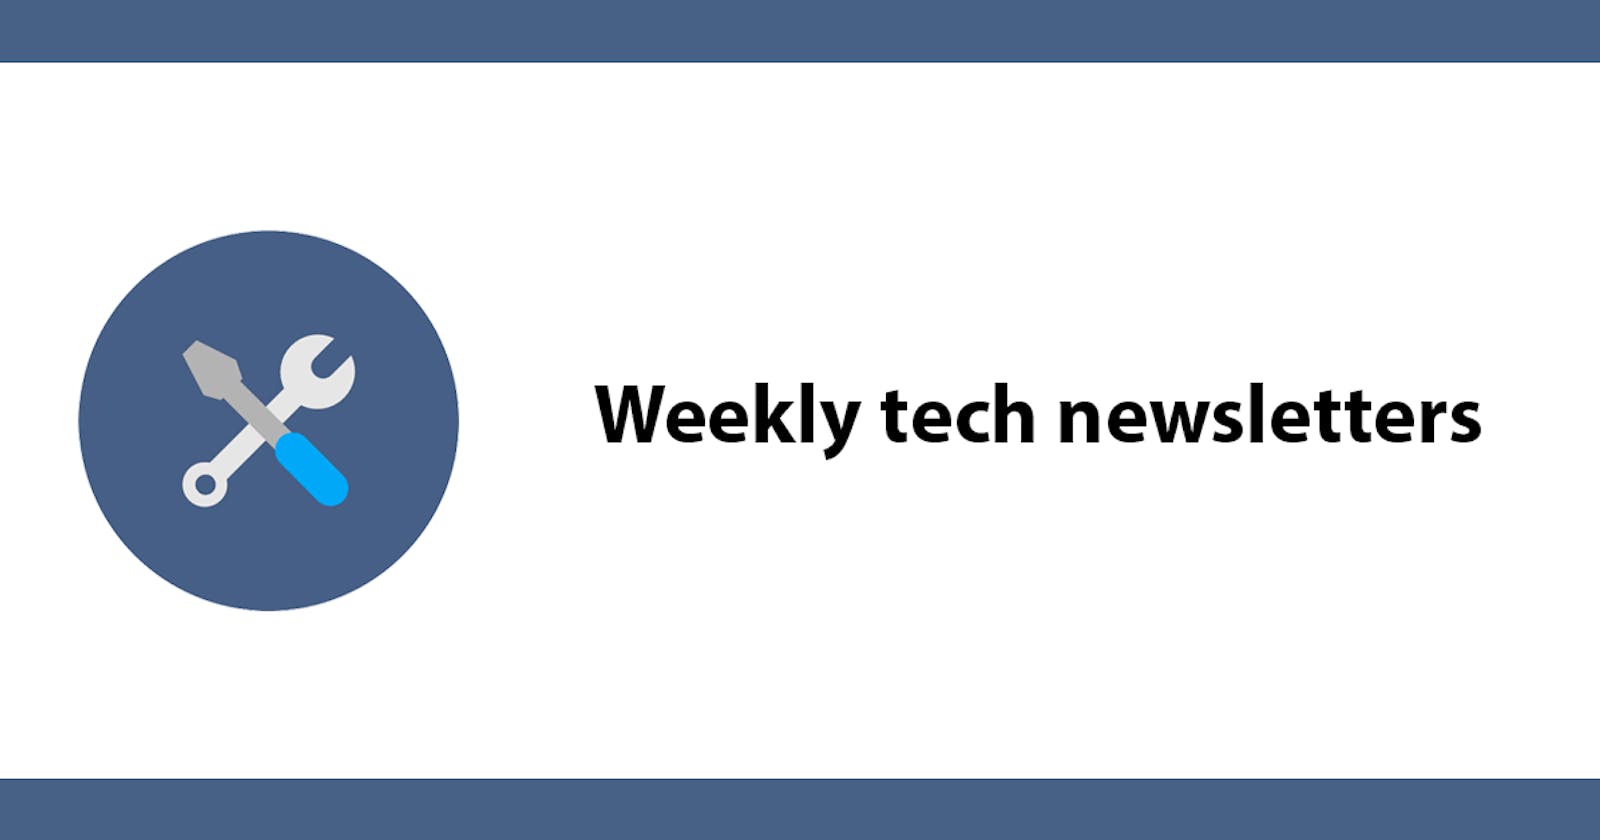 Weekly tech newsletters